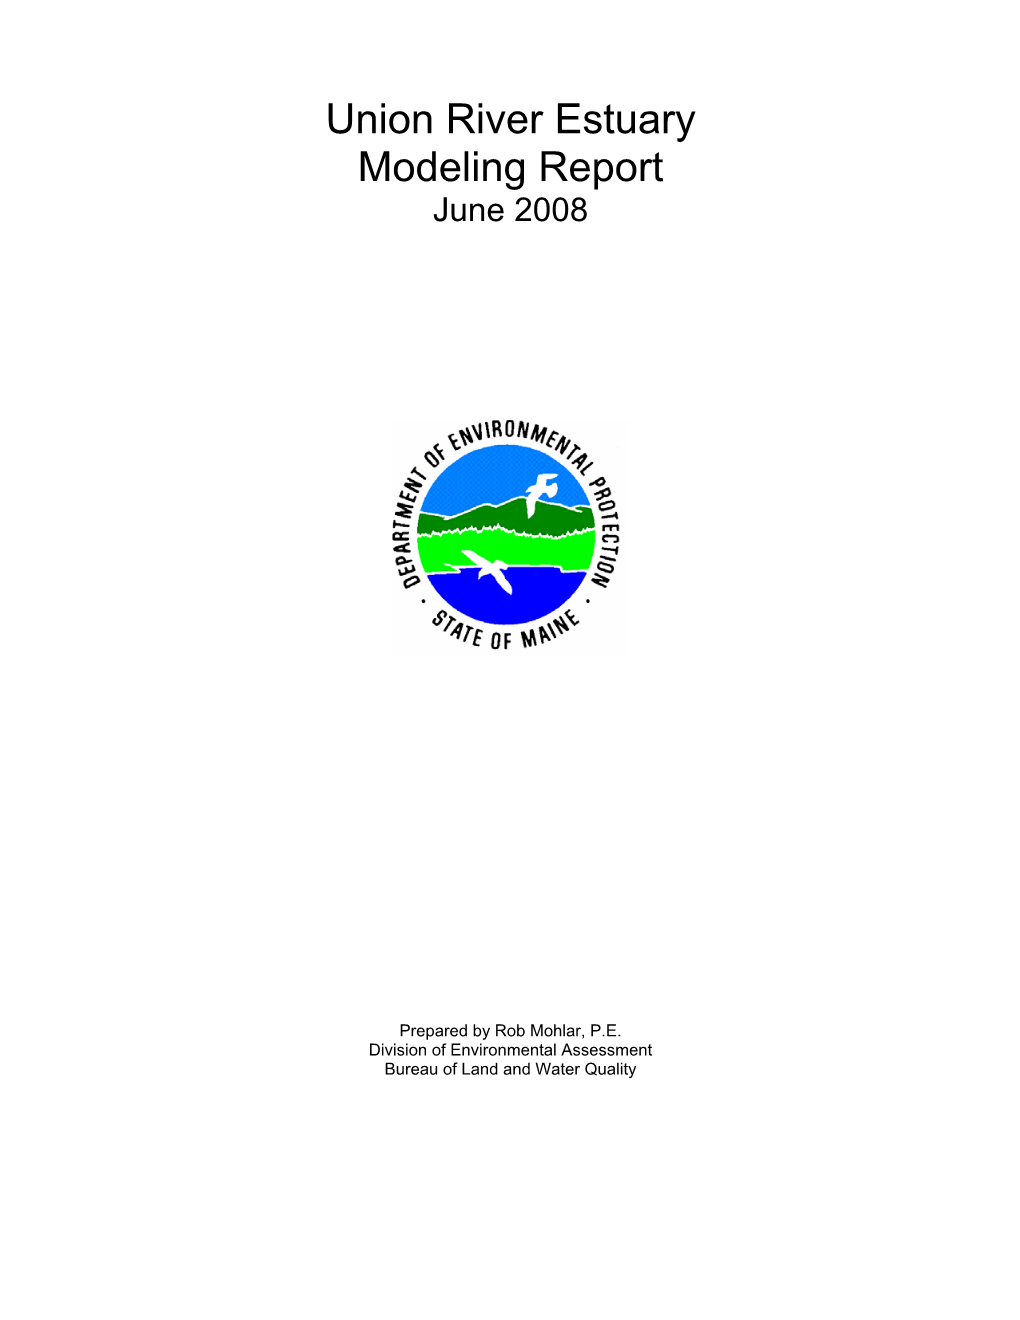 Union River Estuary Modeling Report June 2008